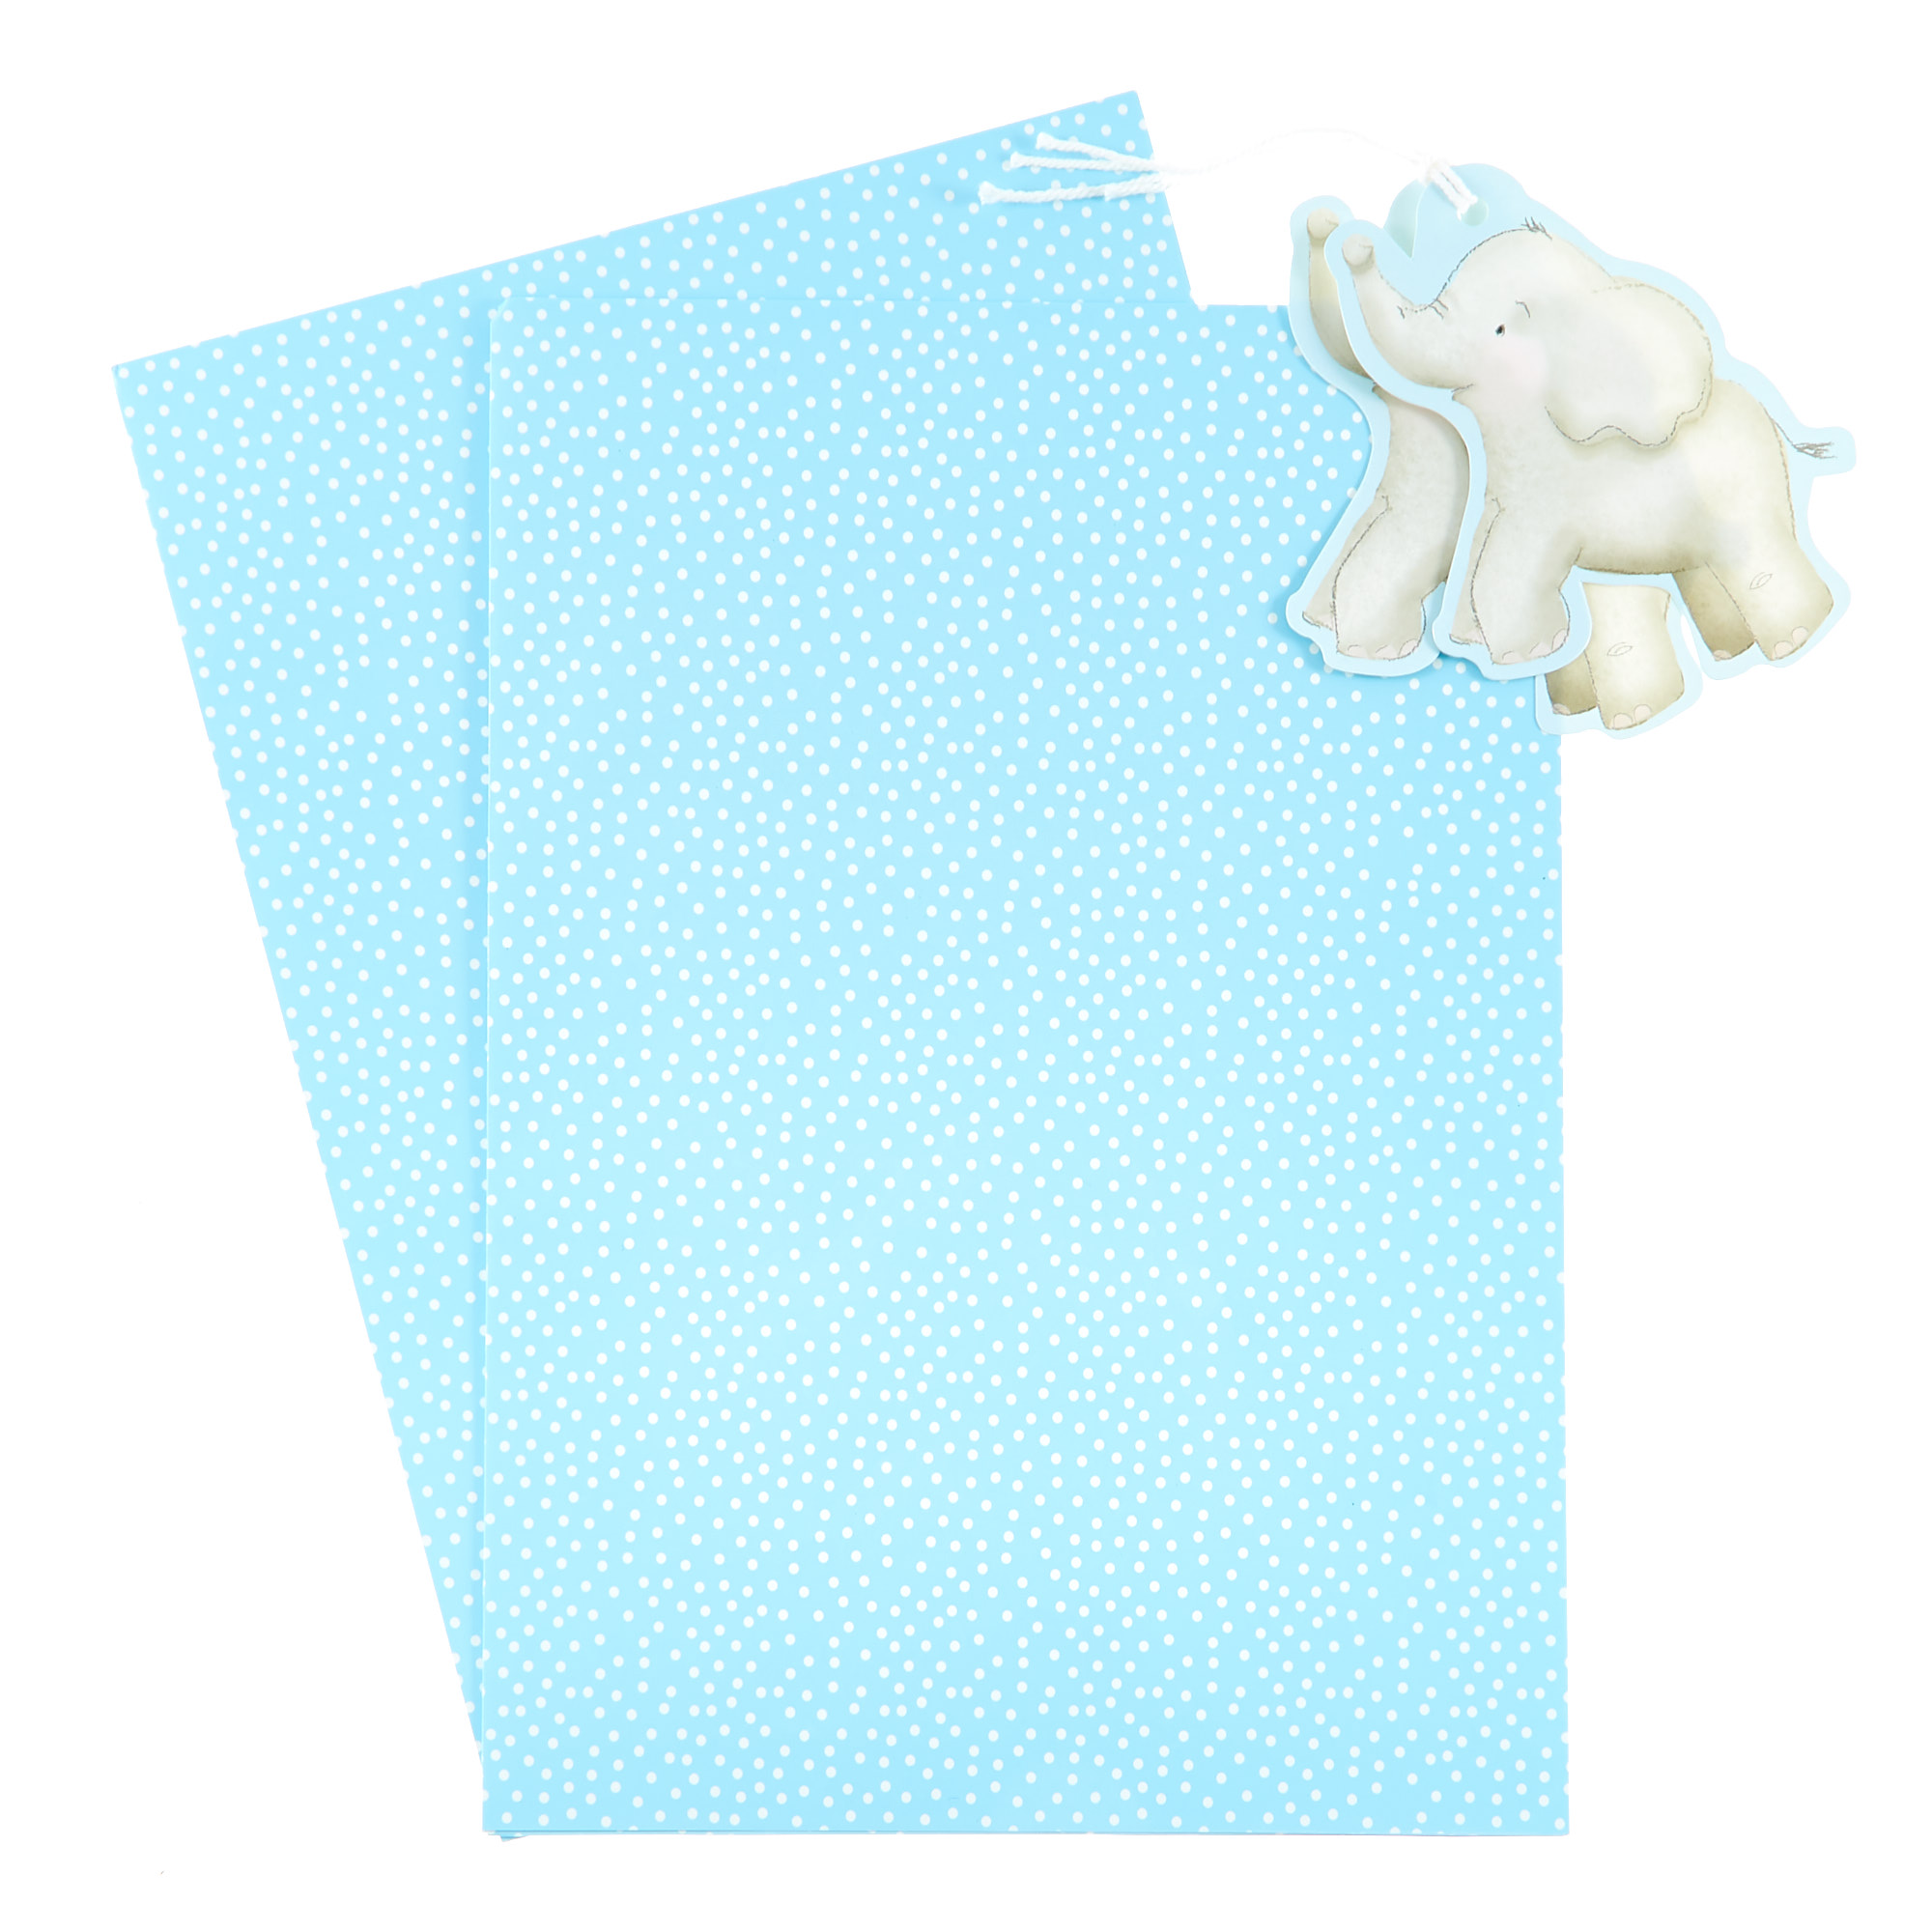 Blue & White Spotty Elephant Gift Wrap & Tag Set